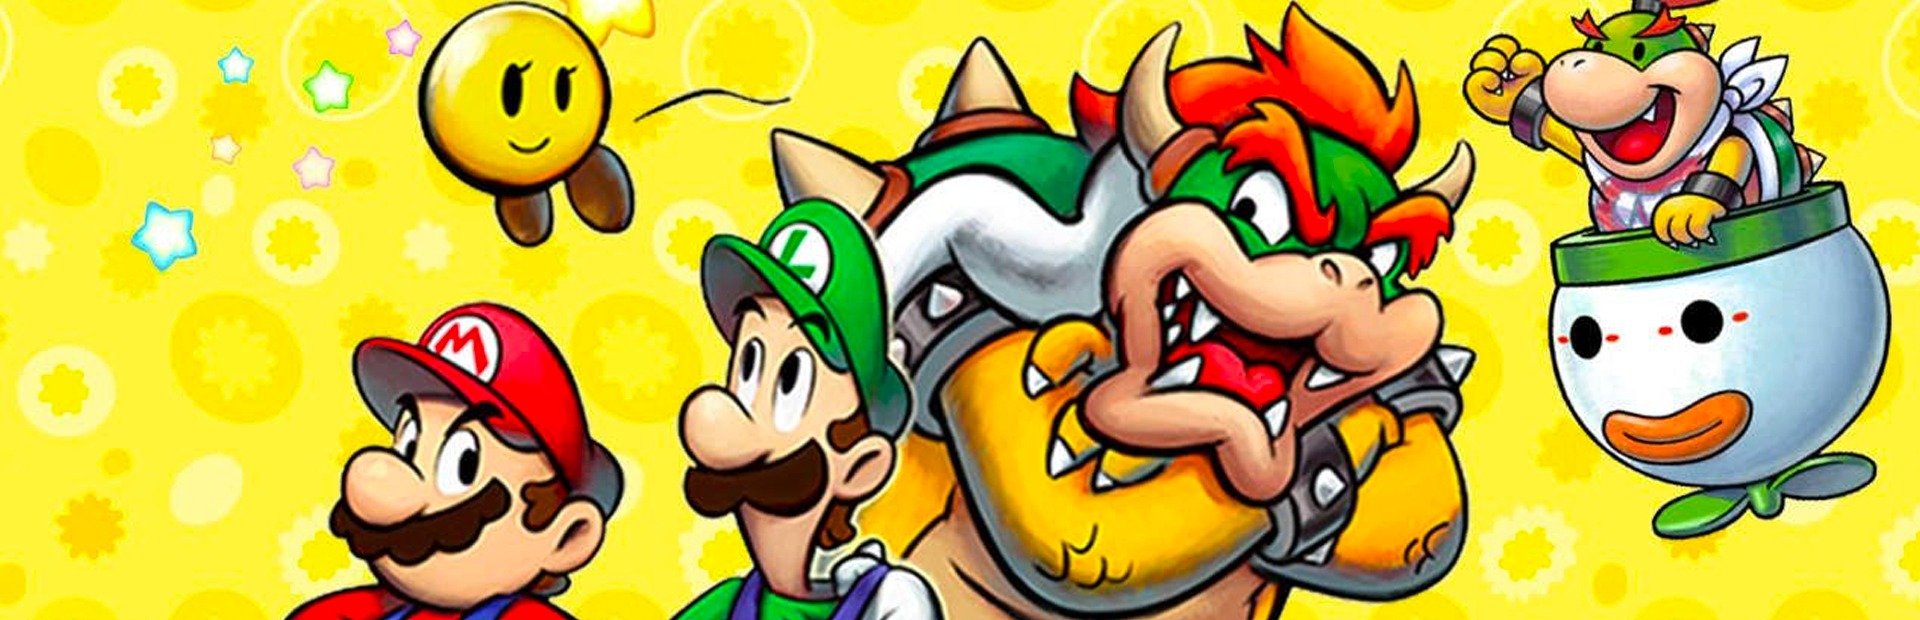 Mario story. Супер братья Марио Луиджи. Луиджи и Боузер. Марио и Луиджи и Боузер. Марио и Луиджи Боузер инсайд стори.